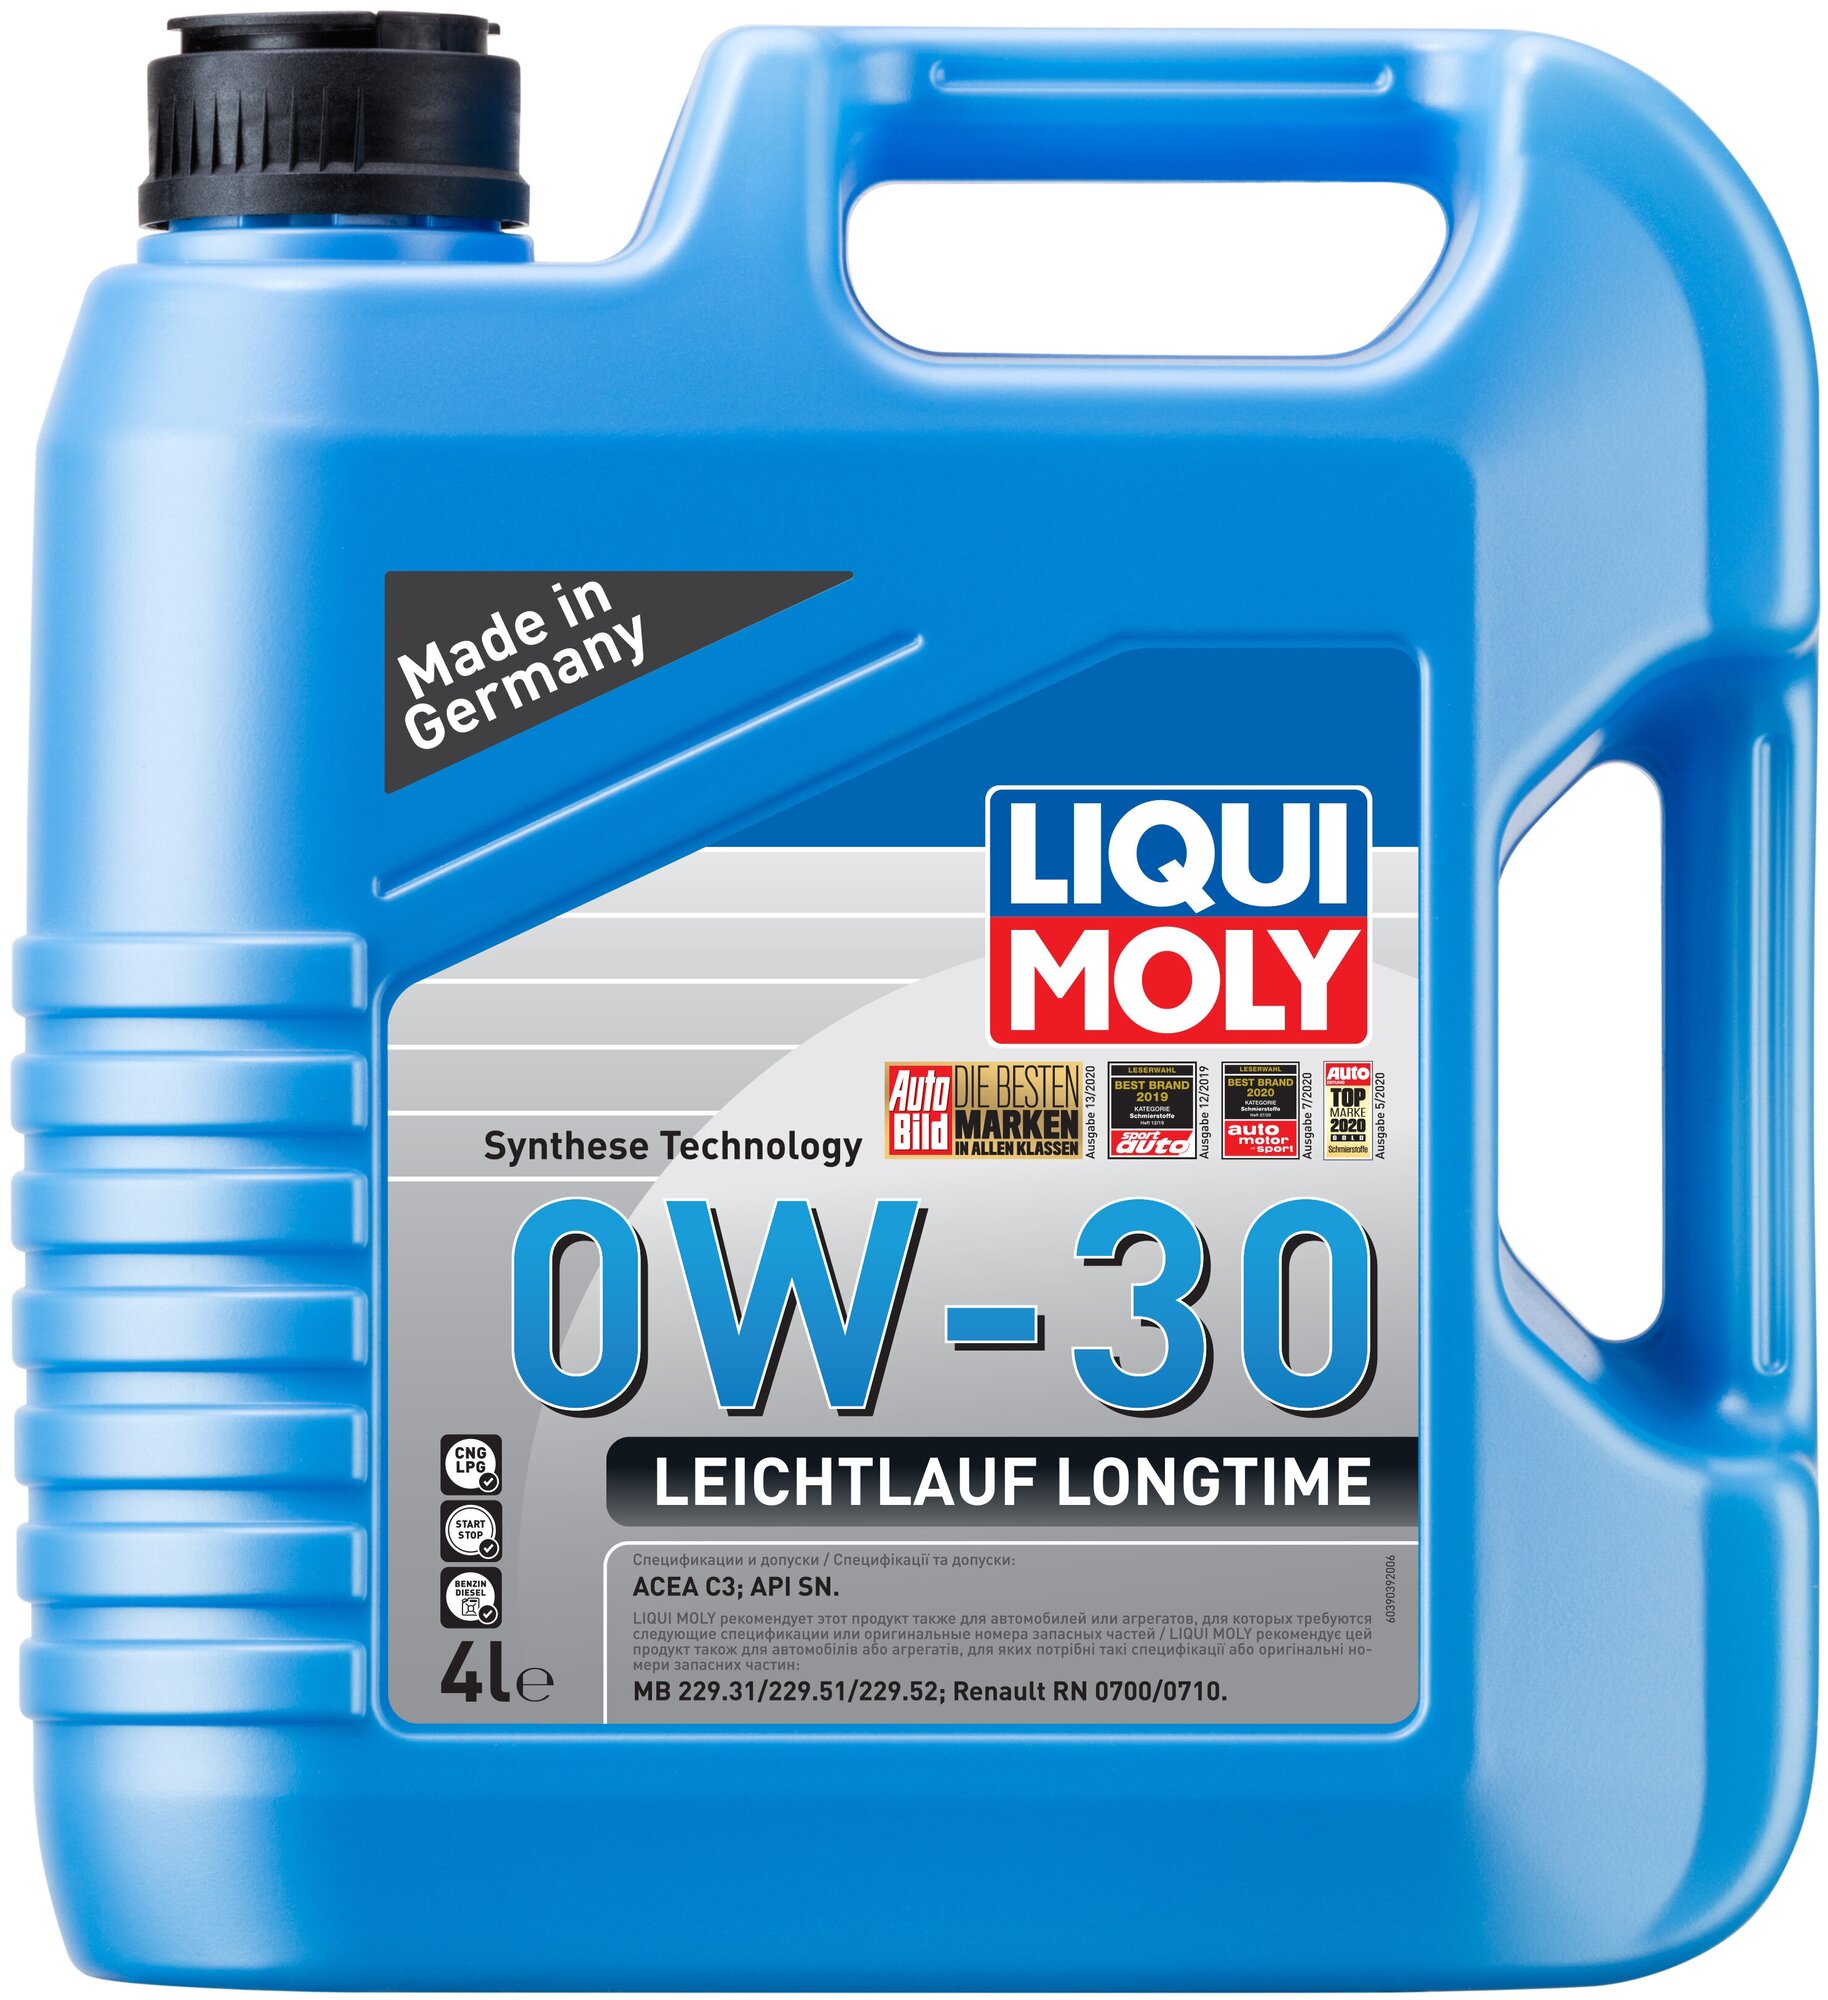 Liqui Moly Leichtlauf Longtime 0W30 НС-синтетическое моторное масло